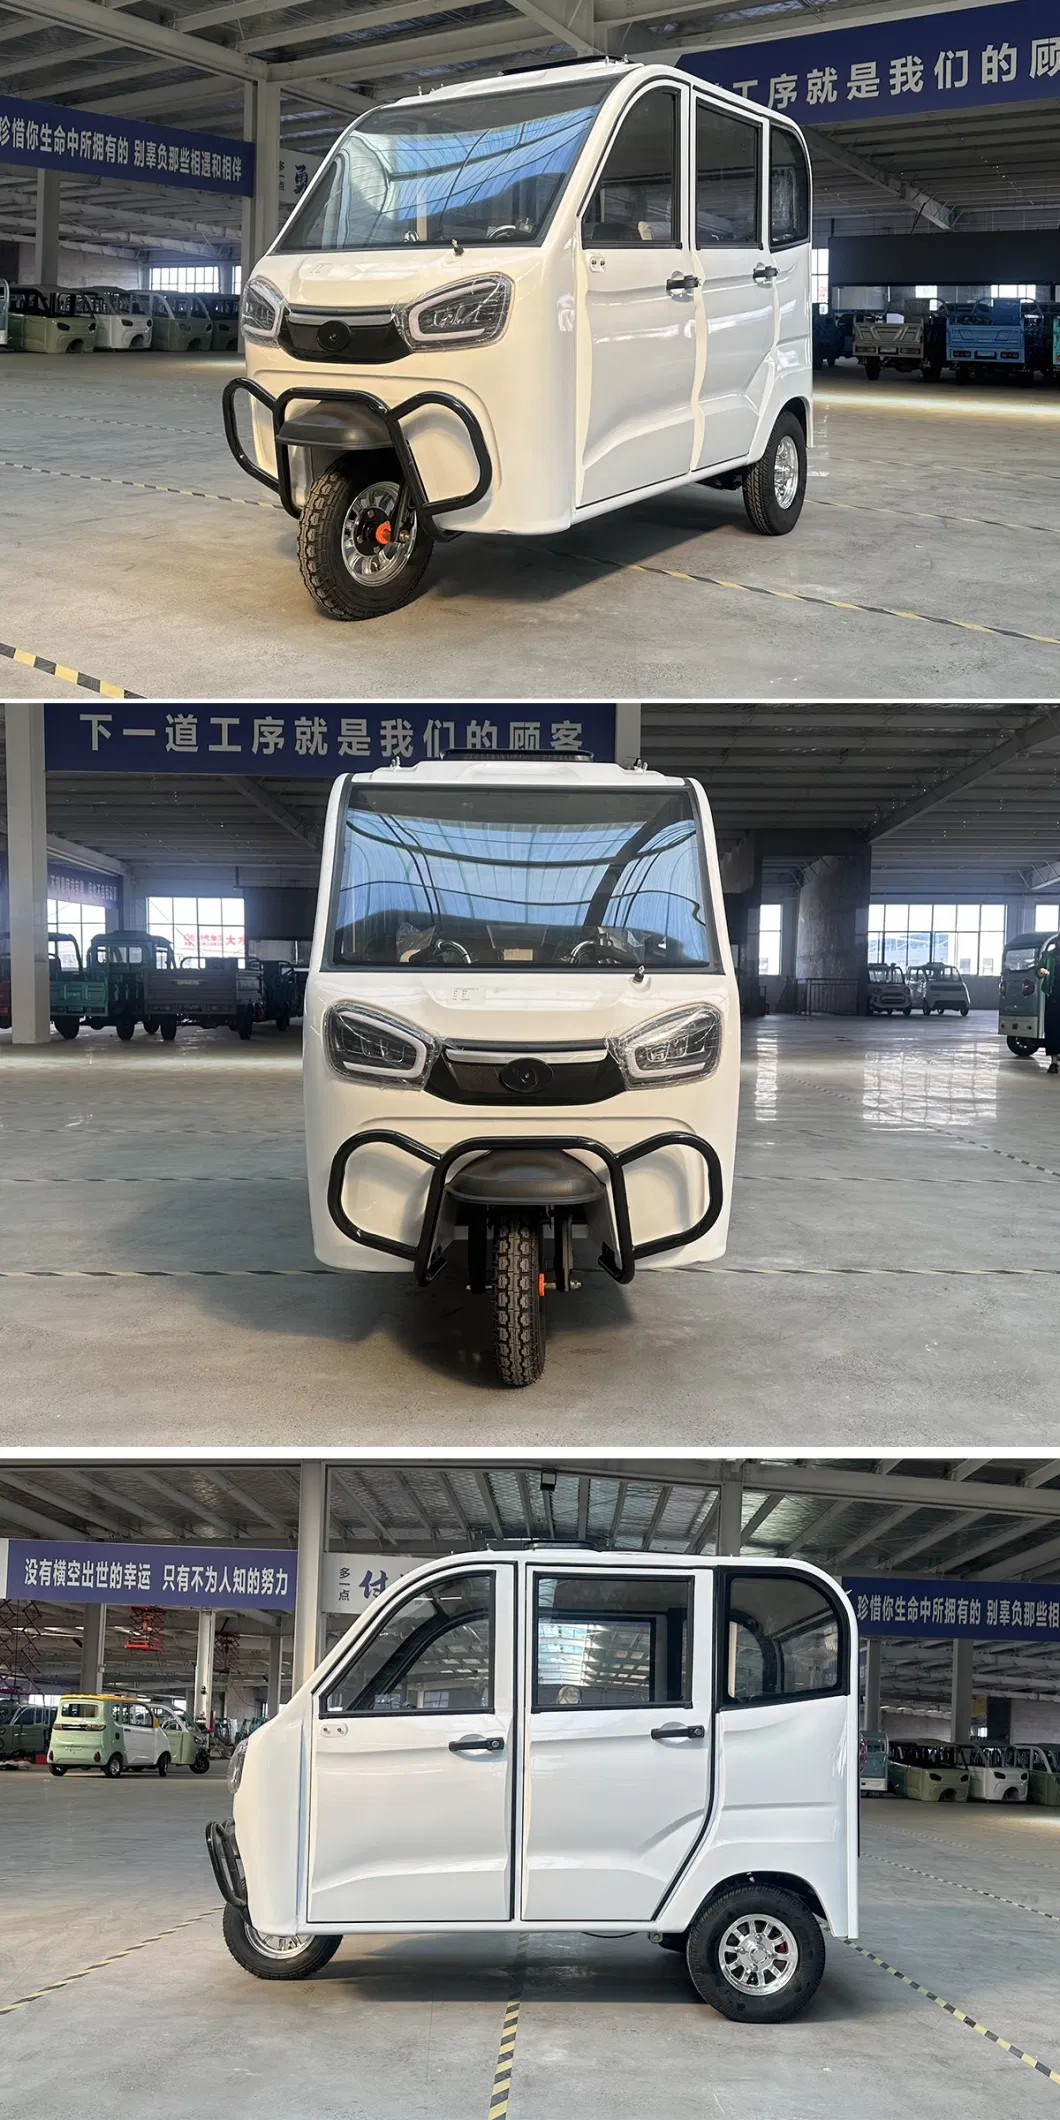 Meidi China New Solar Energy Special Closed Tuk Tuk Mini Vehicle Electric 3 Wheeler Three Wheel Tricycle Three-Wheeled Passenger Auto Rickshaw for Adult